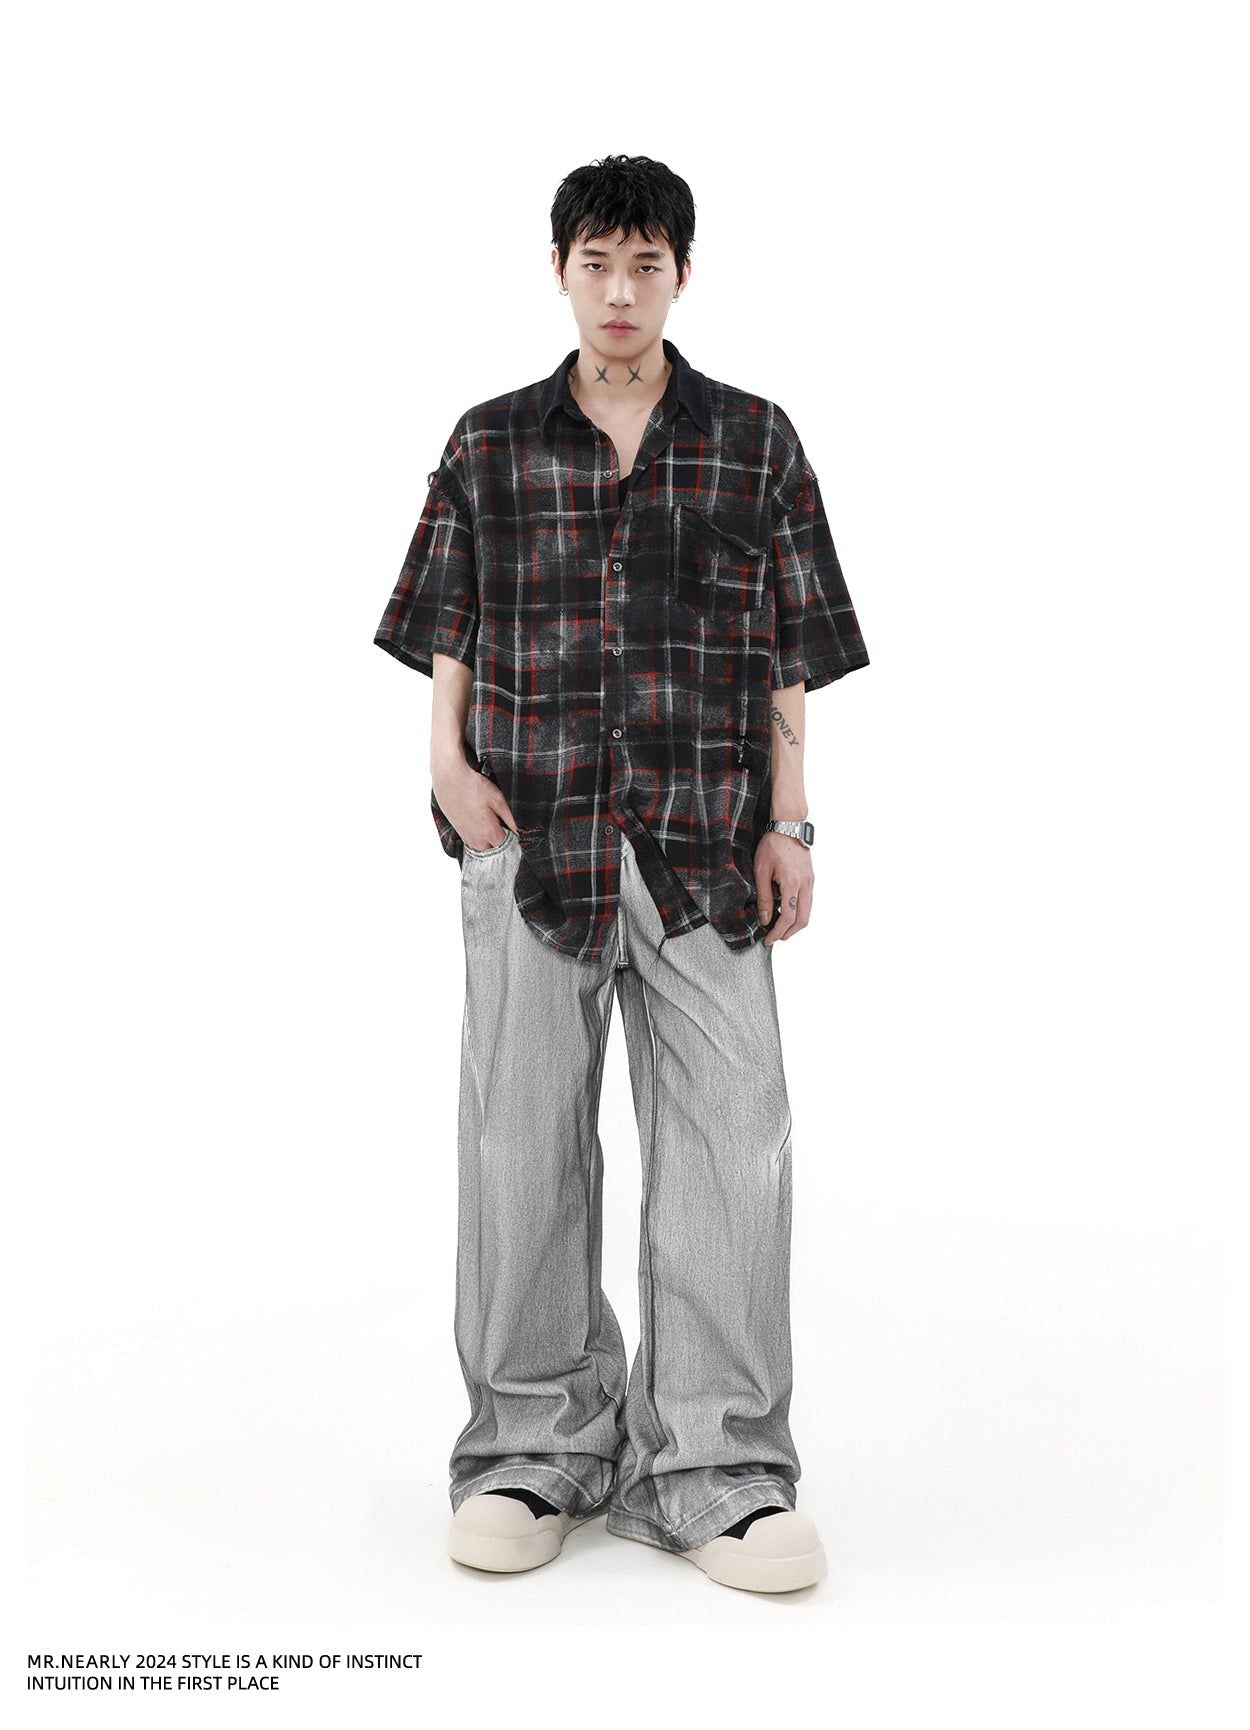 Distressed Dark Plaid Shirt Korean Street Fashion Shirt By Mr Nearly Shop Online at OH Vault